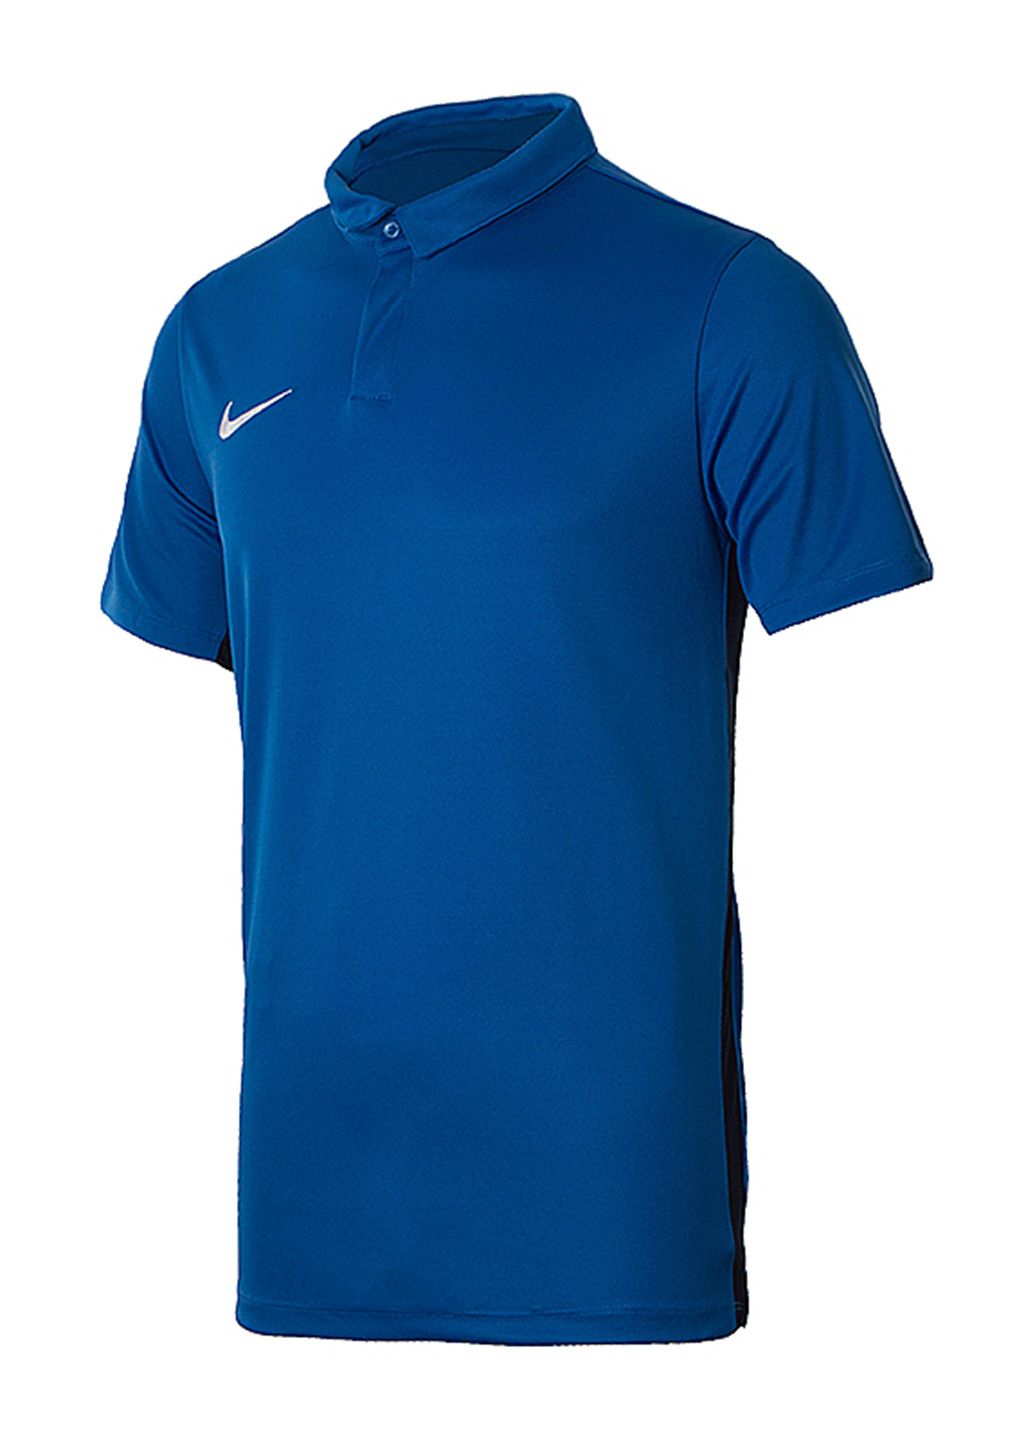 Синяя футболка-поло для мужчин Nike с логотипом